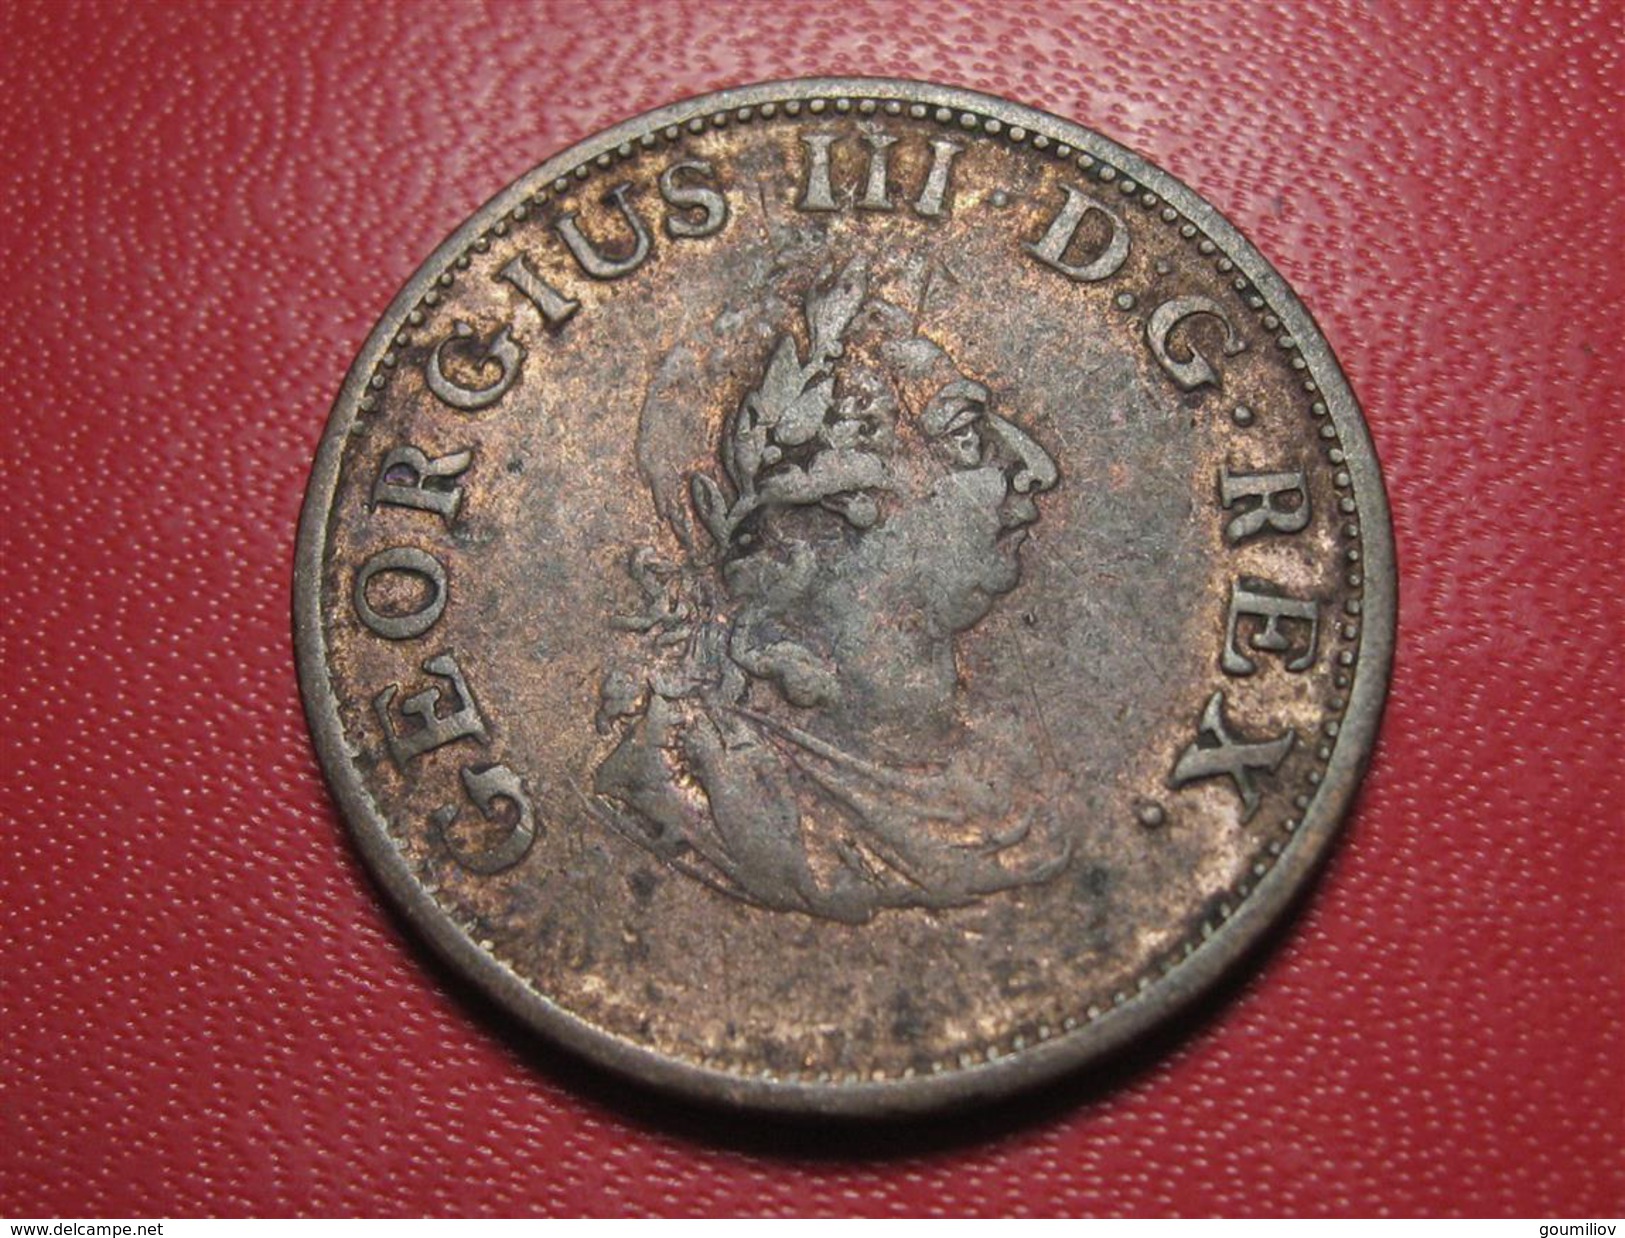 Ireland - 1/2 Penny 1805 - Belle Patine 8204 - Ireland